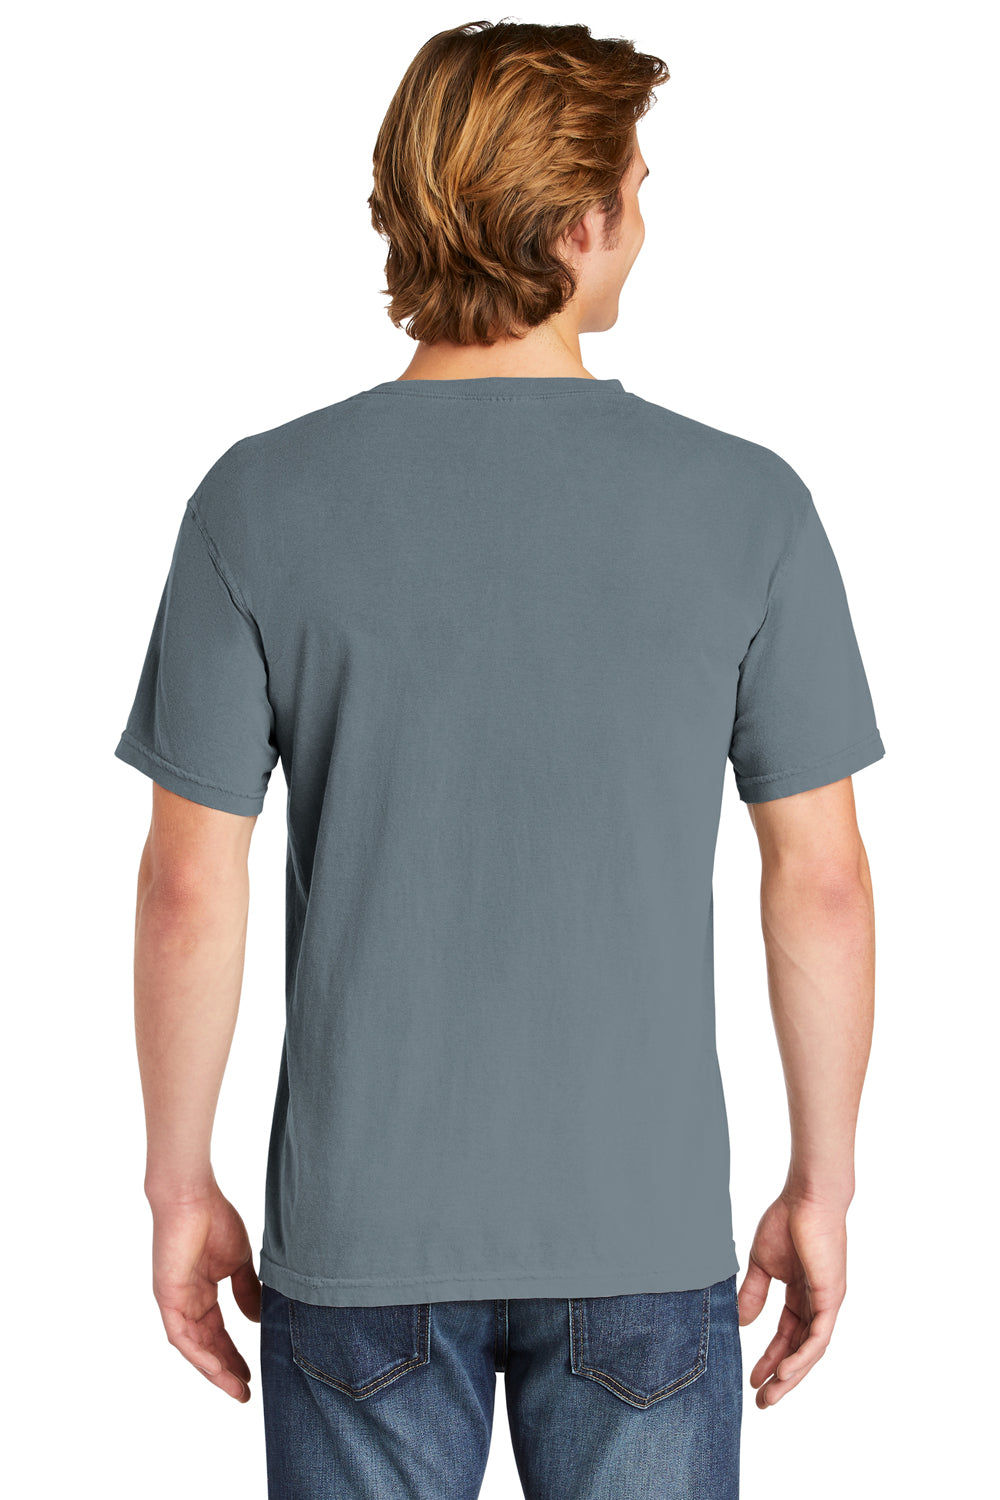 Comfort Colors C1717 Mens Short Sleeve Crewneck T-Shirt Granite Grey Back